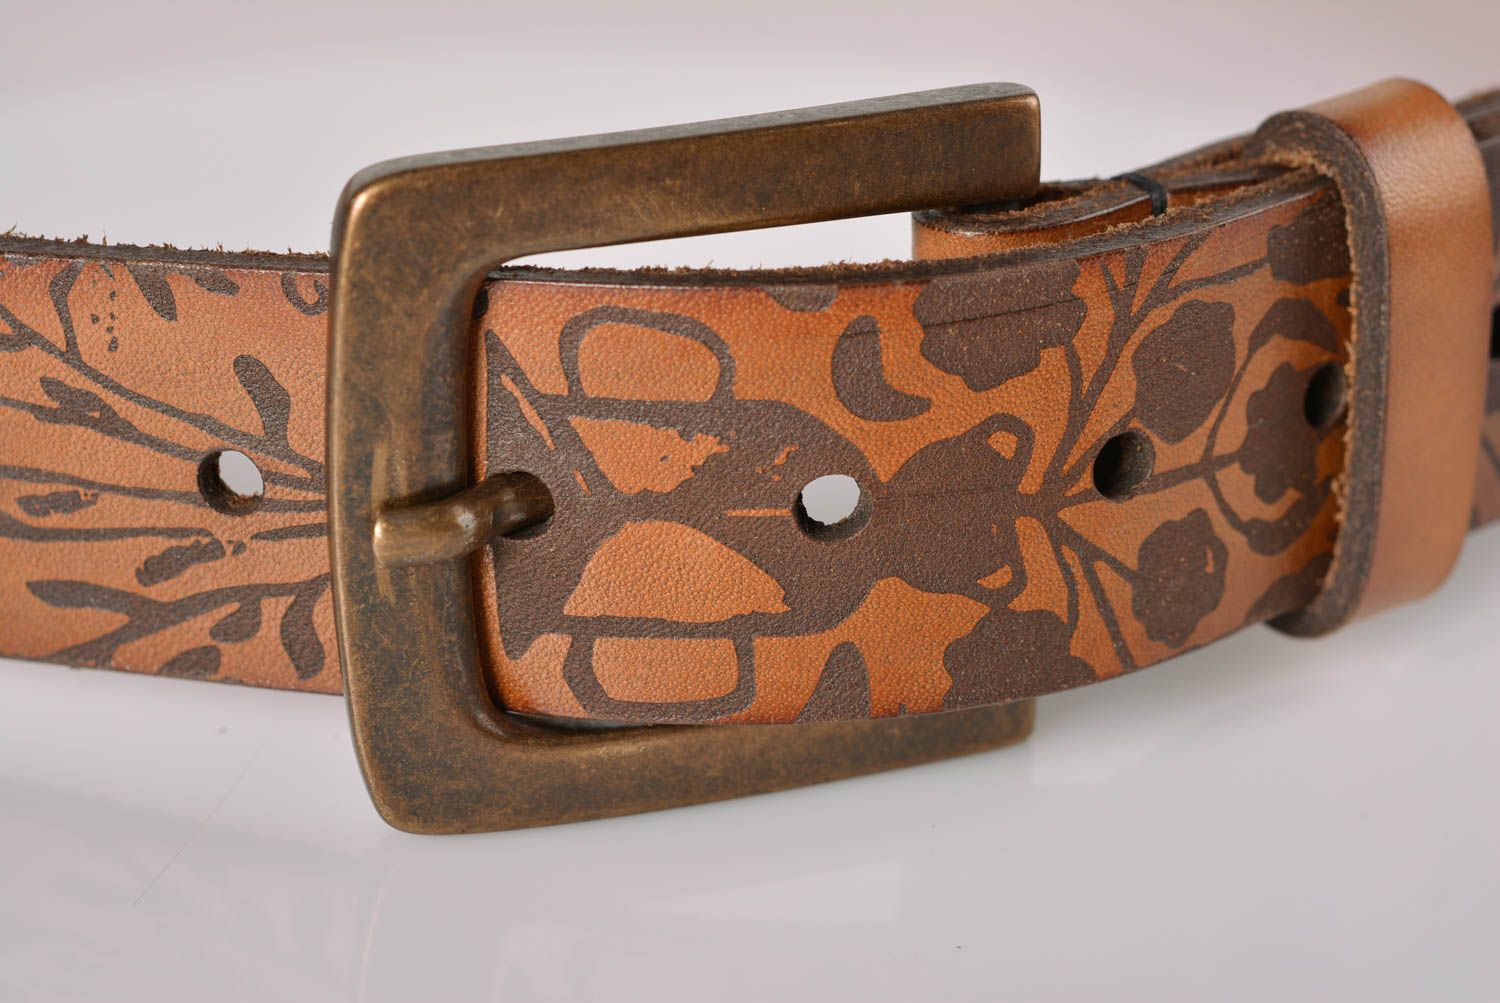 Mens belt handmade leather goods accessories for men designer belts gift for him photo 2